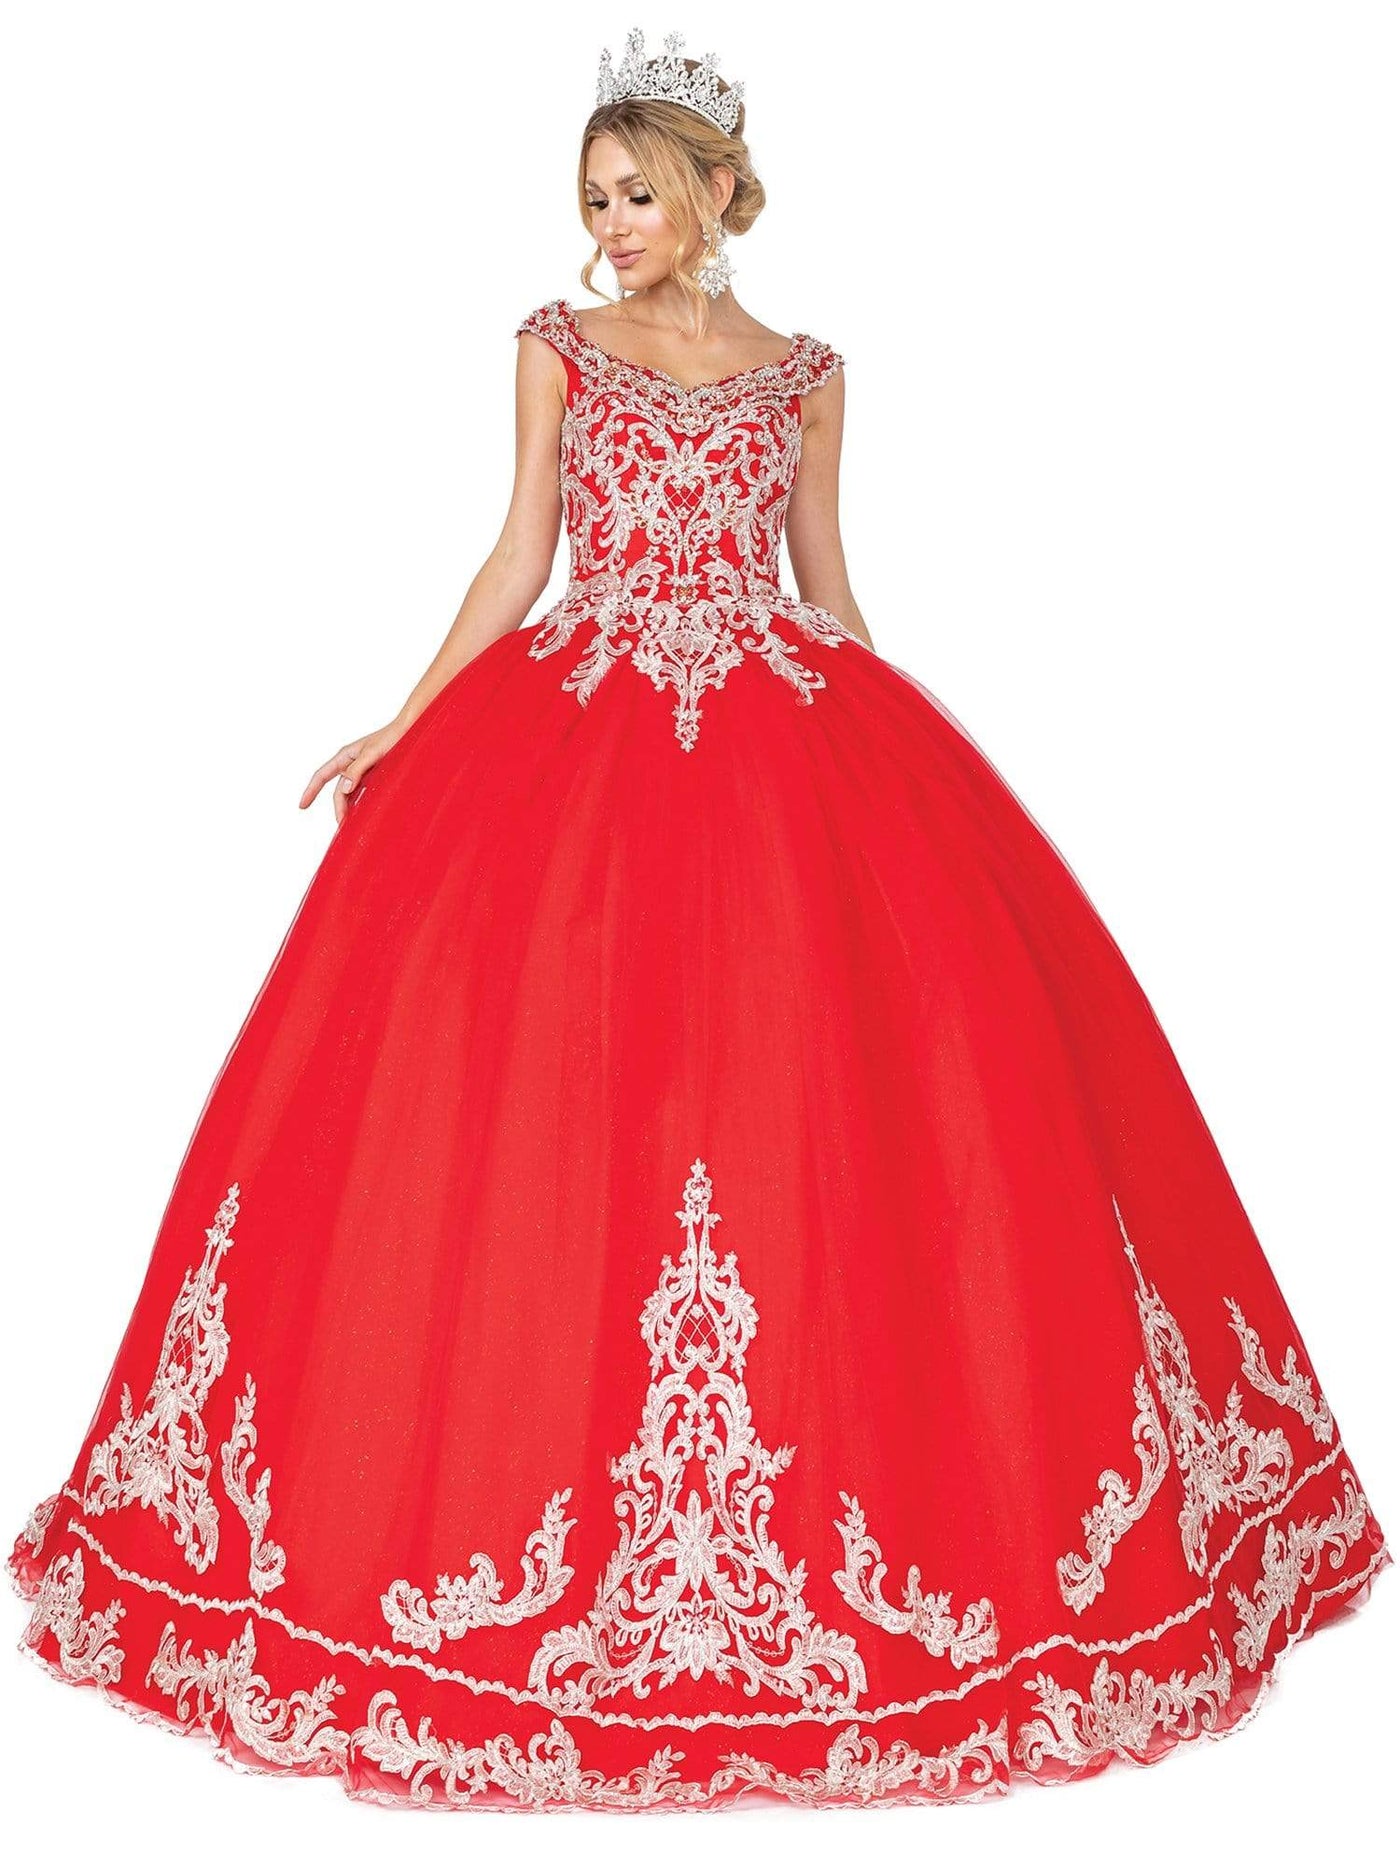 Dancing Queen - 1566 Cap Sleeve Appliqued Ballgown Special Occasion Dress